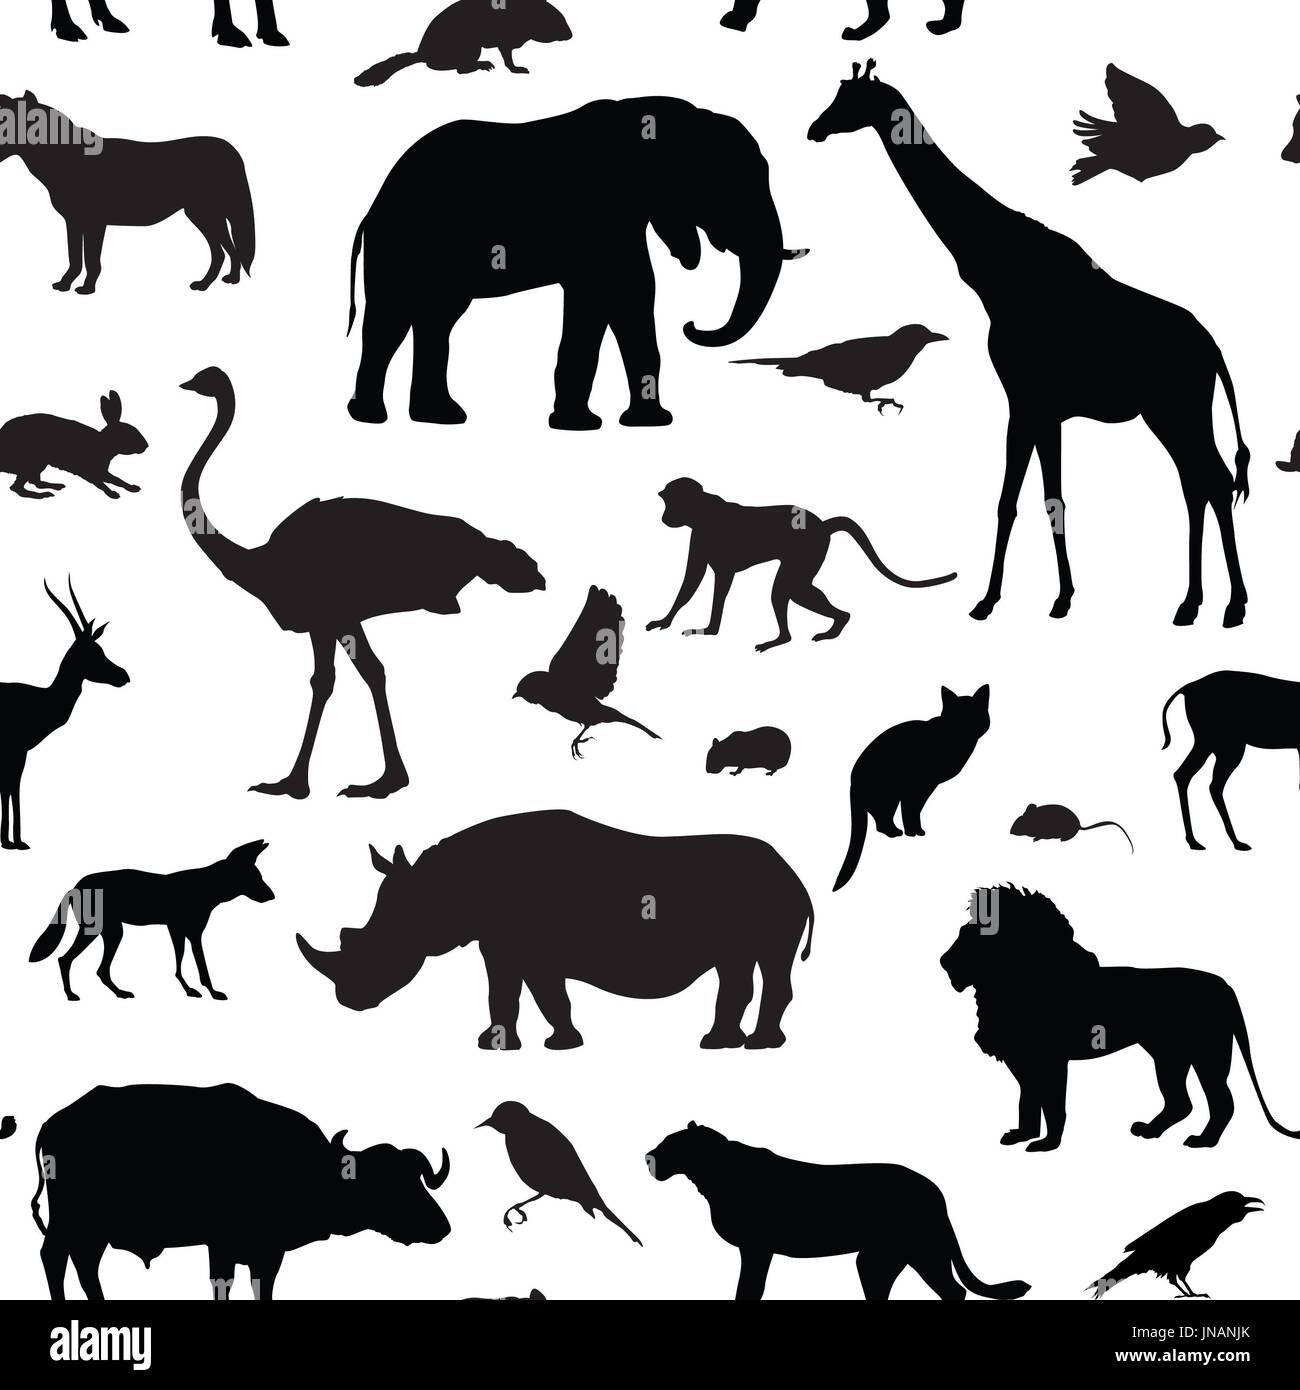 Animals silhouette seamless pattern. Wildlife tiled textured backgroun. African animals seamless pattern Stock Photo